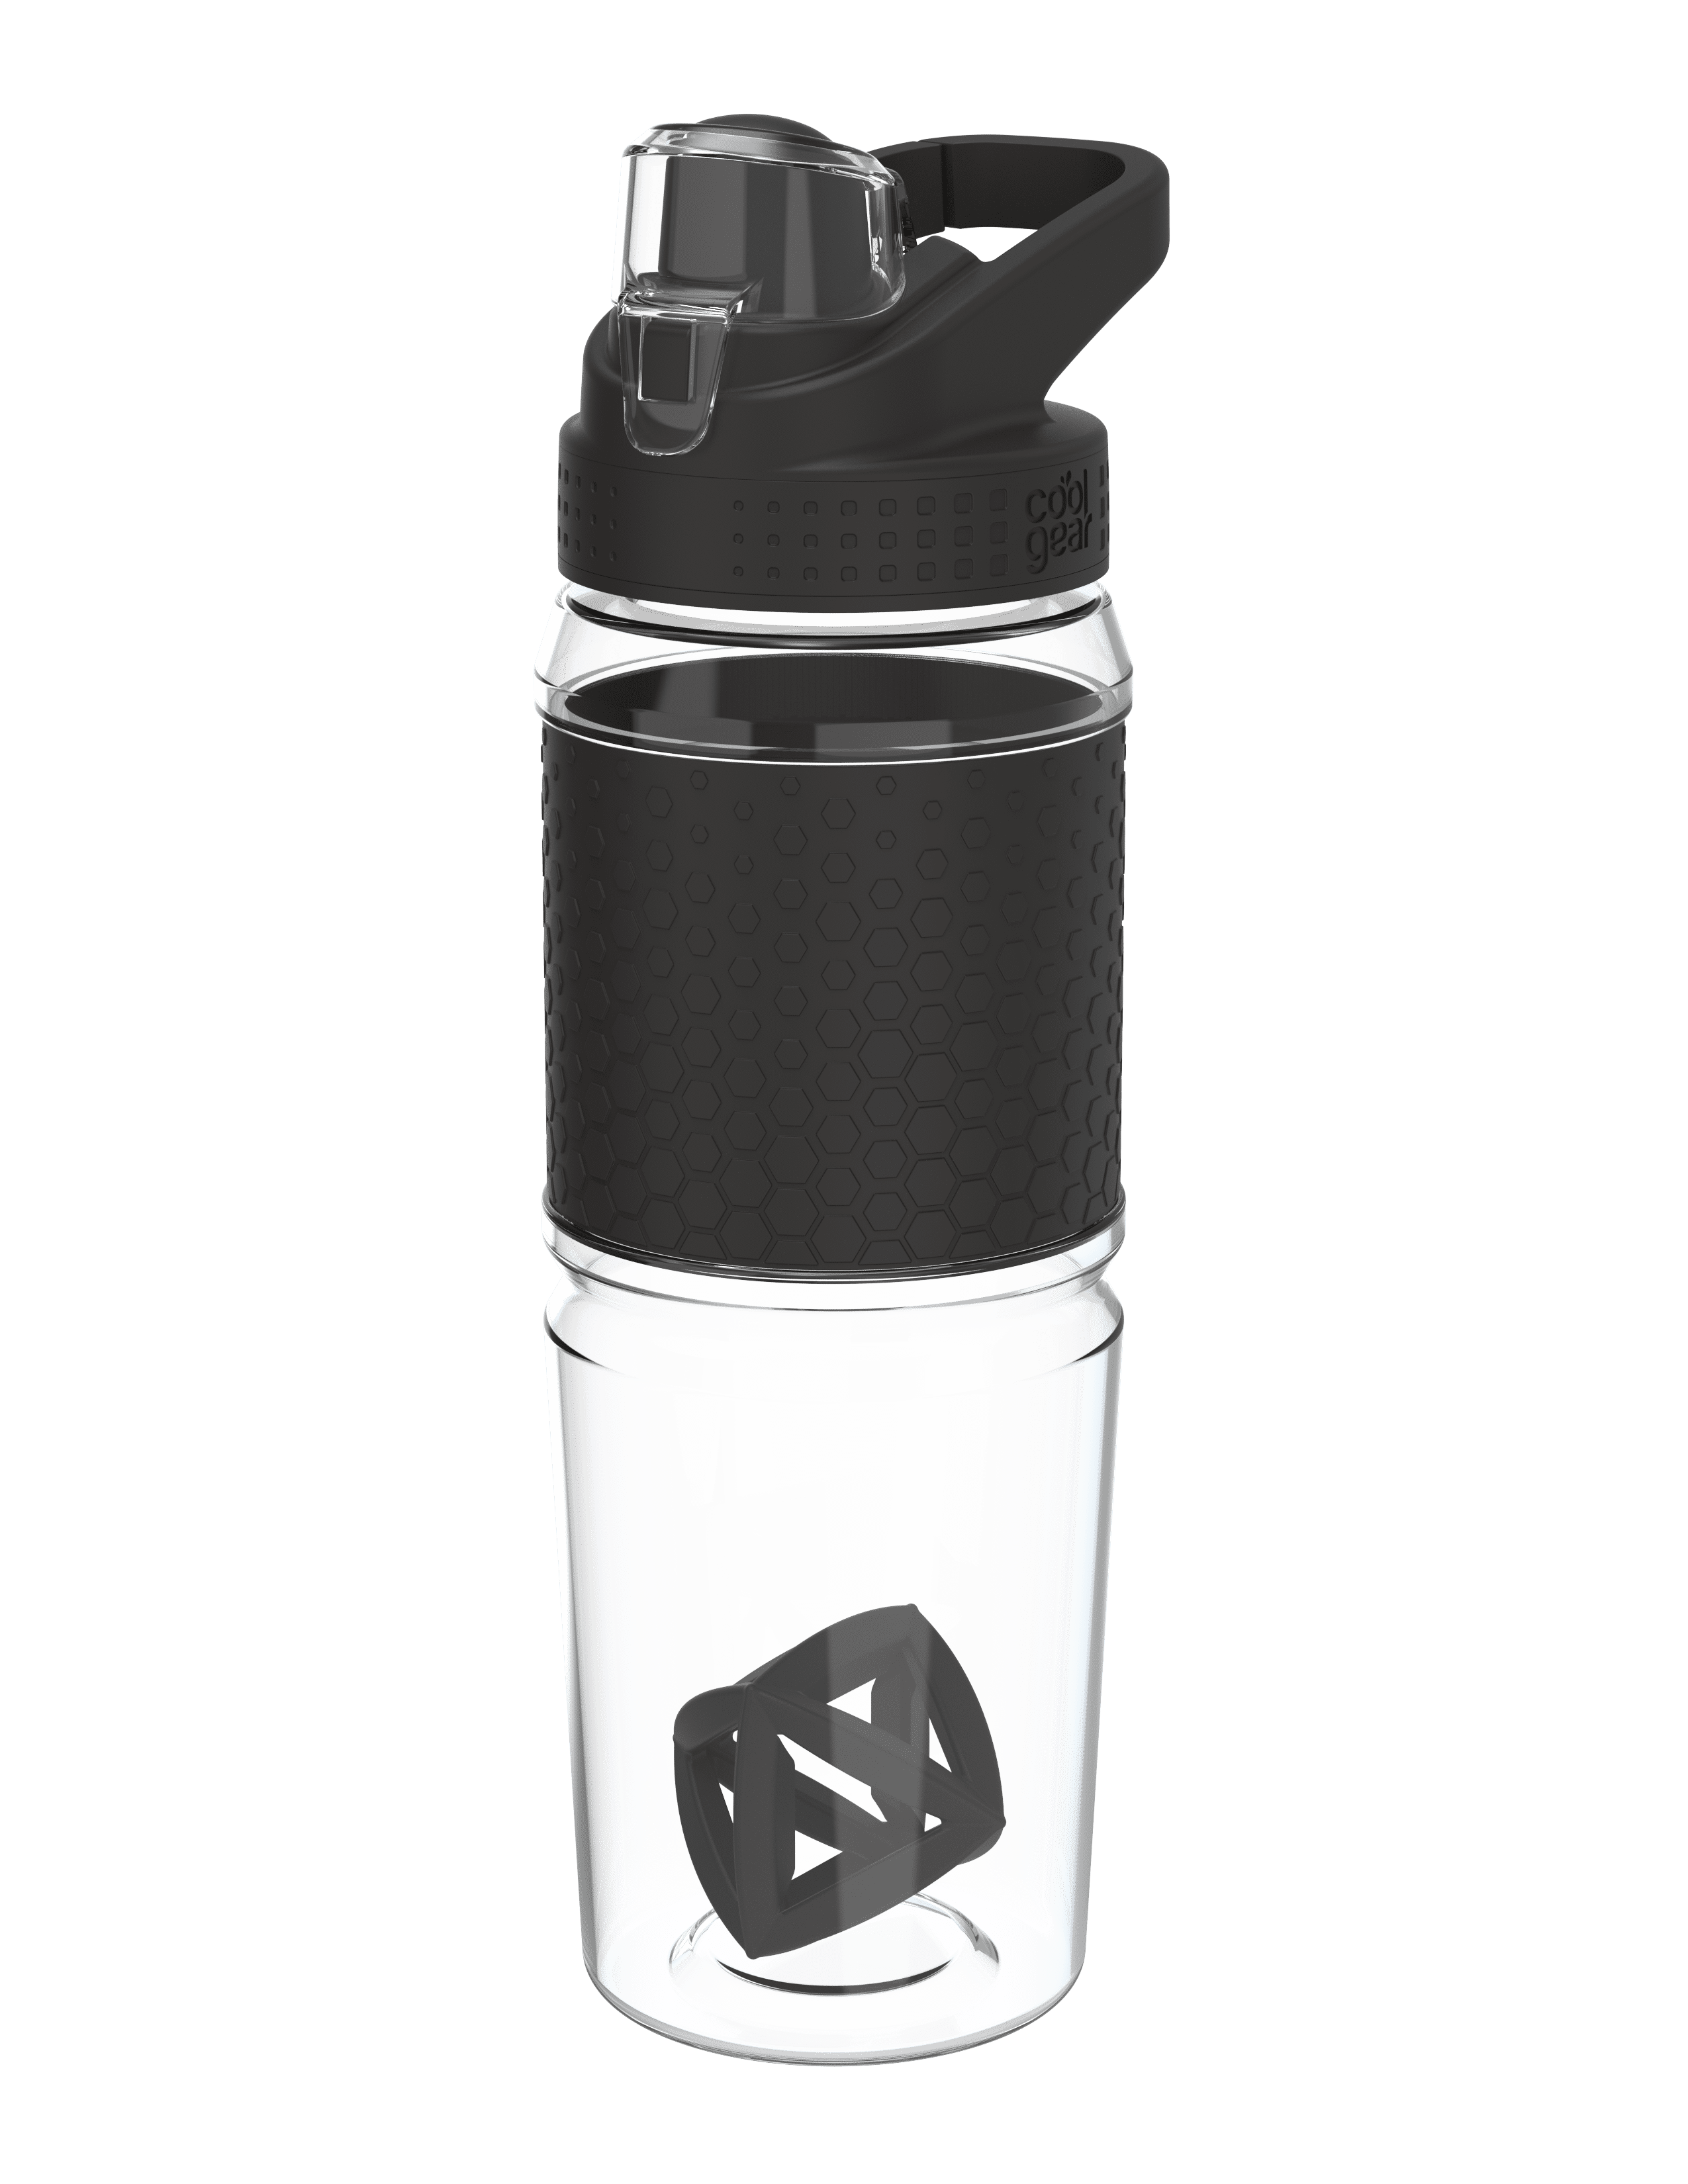 Mainstays 32 Fluid Ounces Shaker Bottle Black